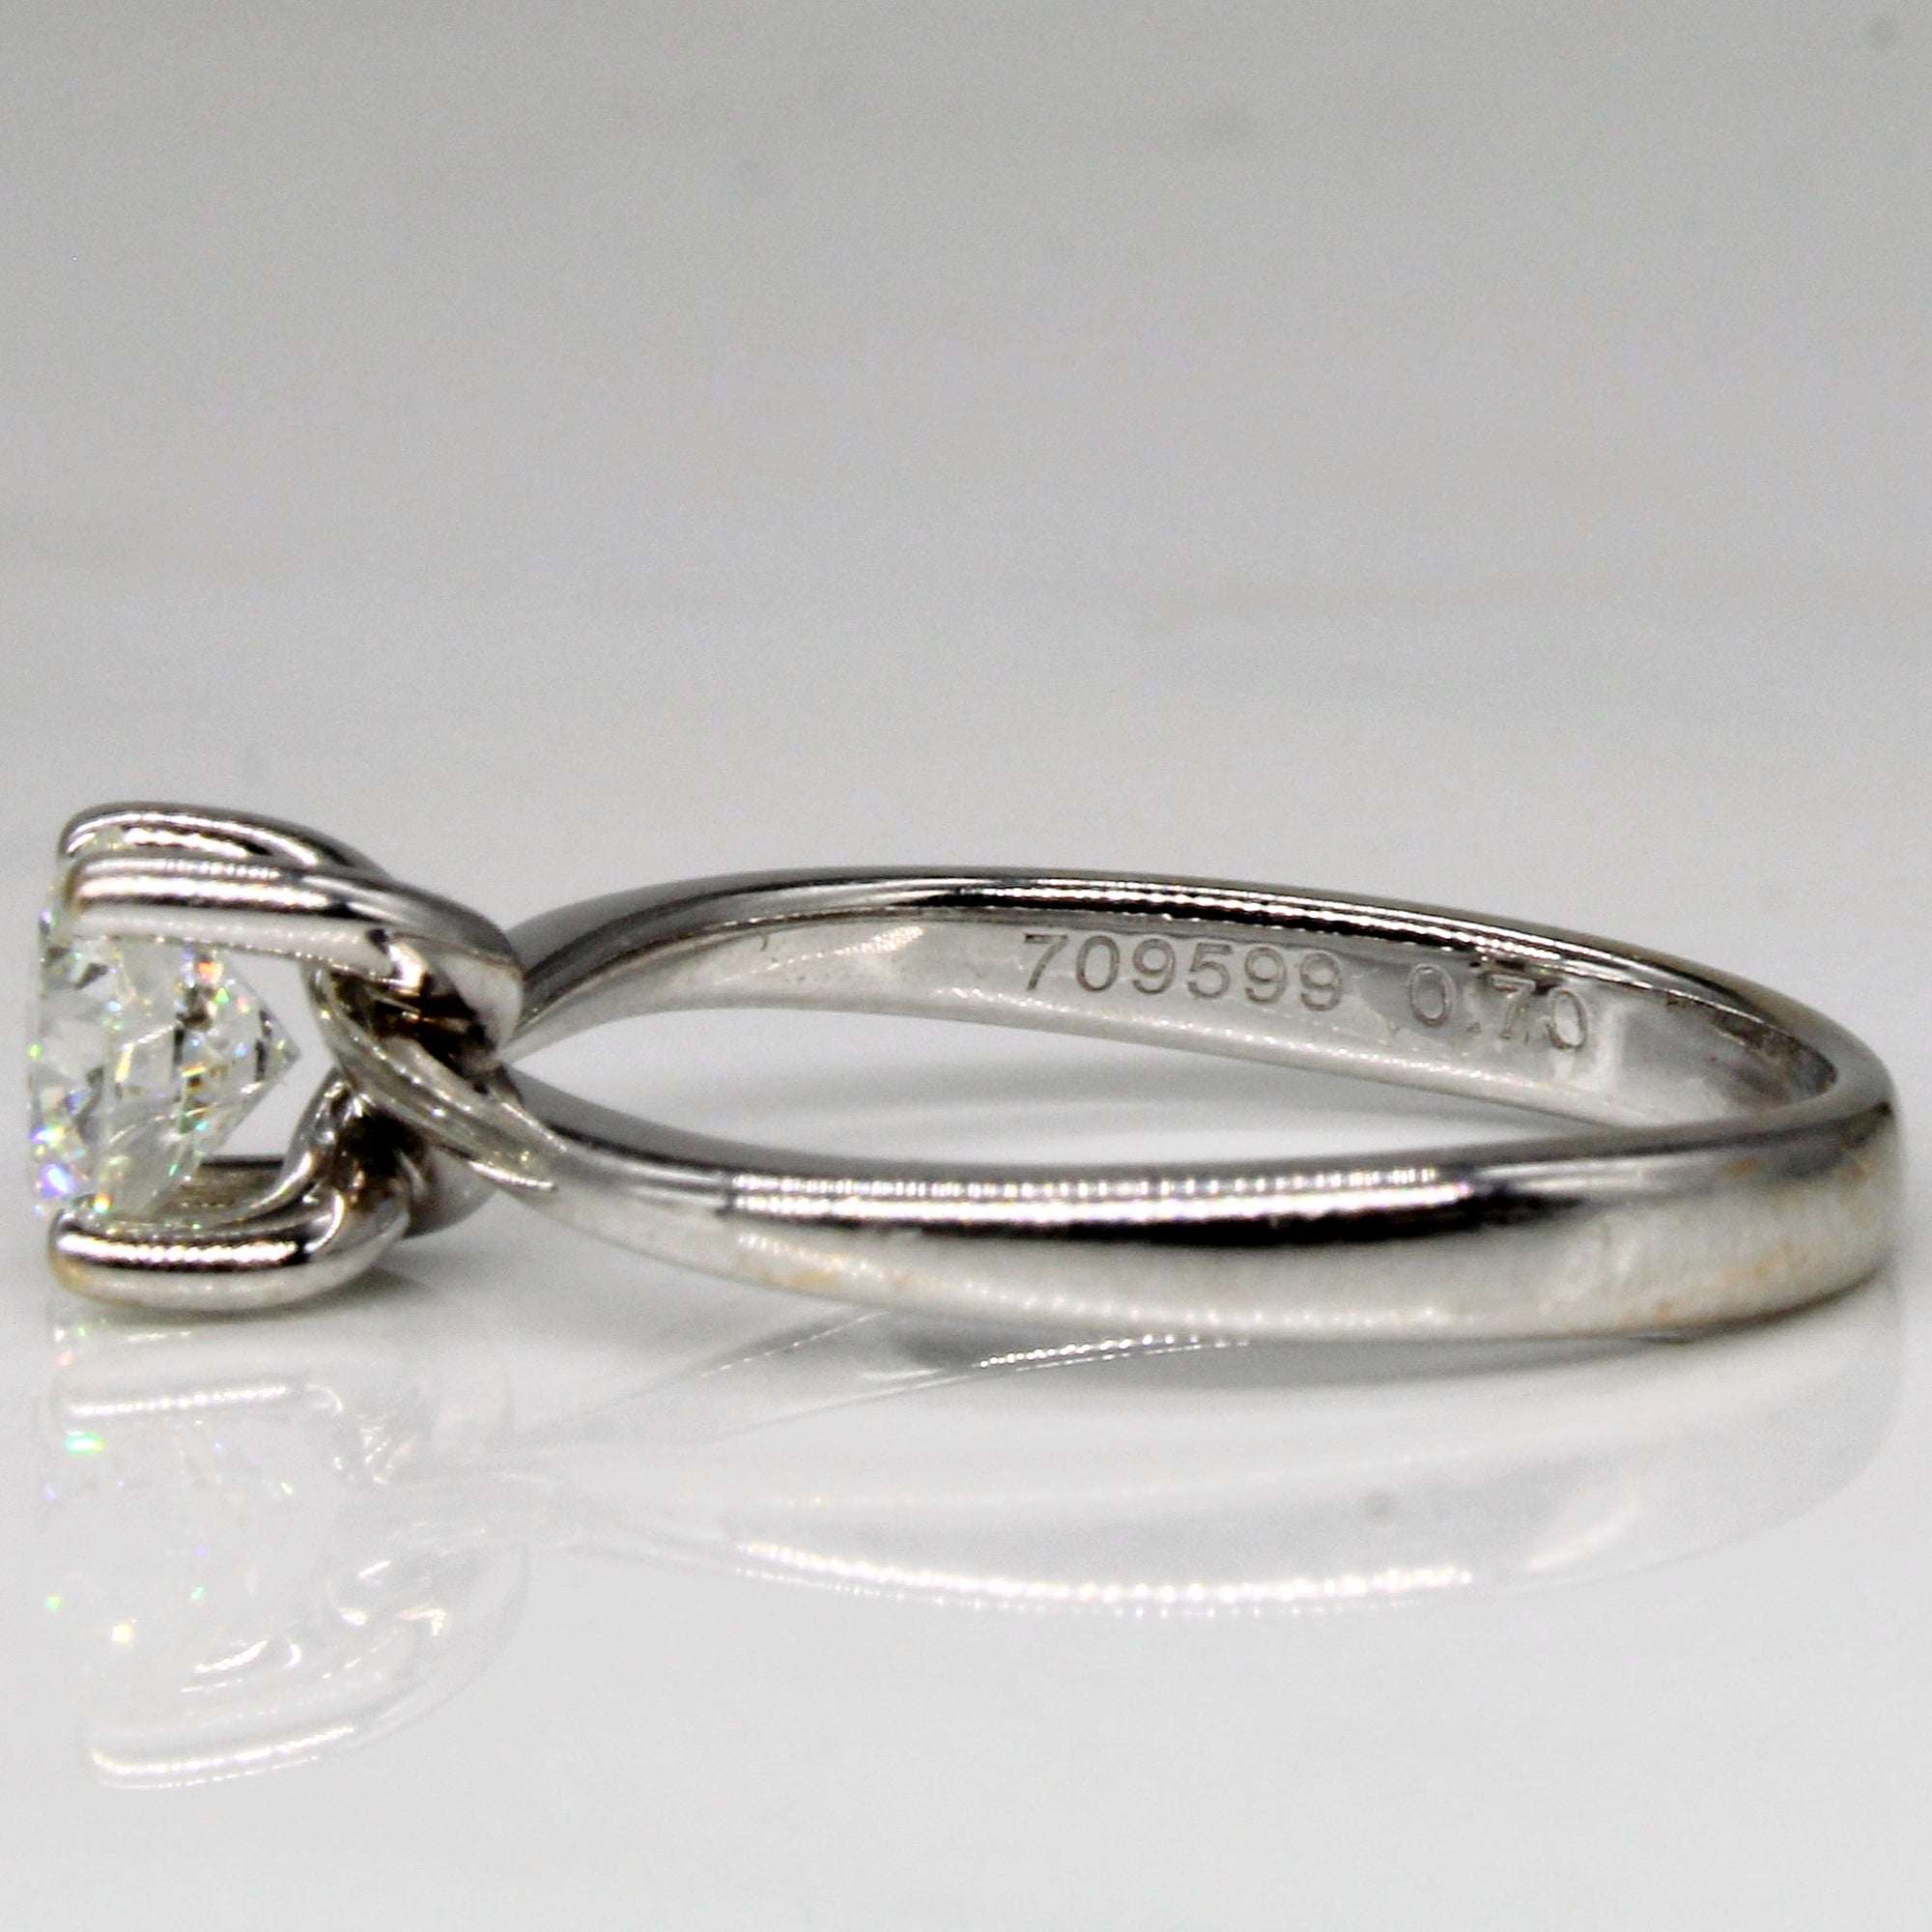 'Birks' Diamond Solitaire Engagement Ring | 0.70ct SI1 J | SZ 6 |